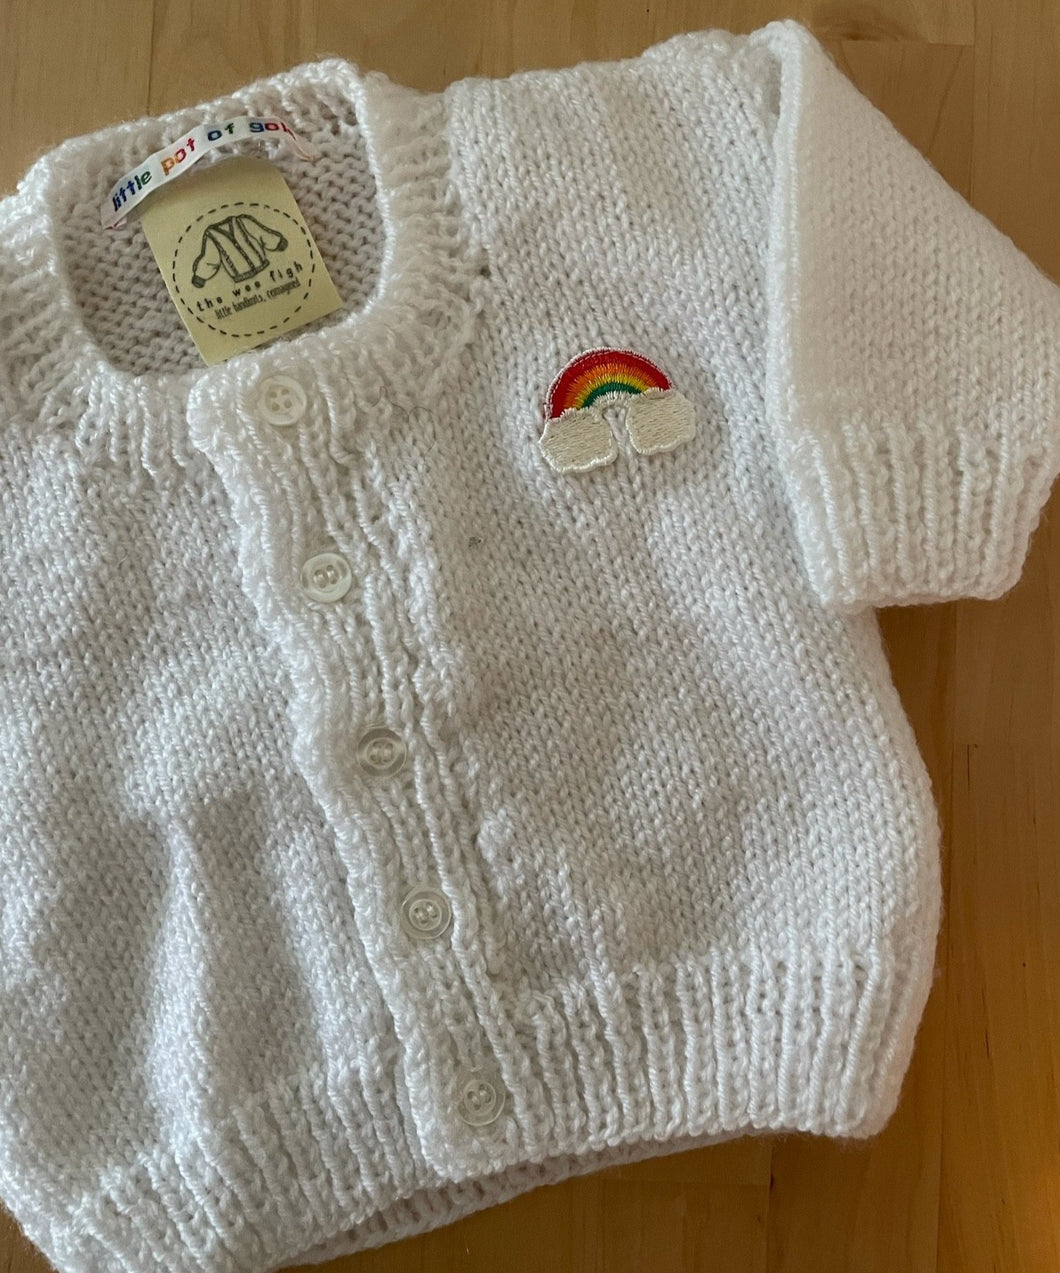 0-3 months - White rainbow cardigan